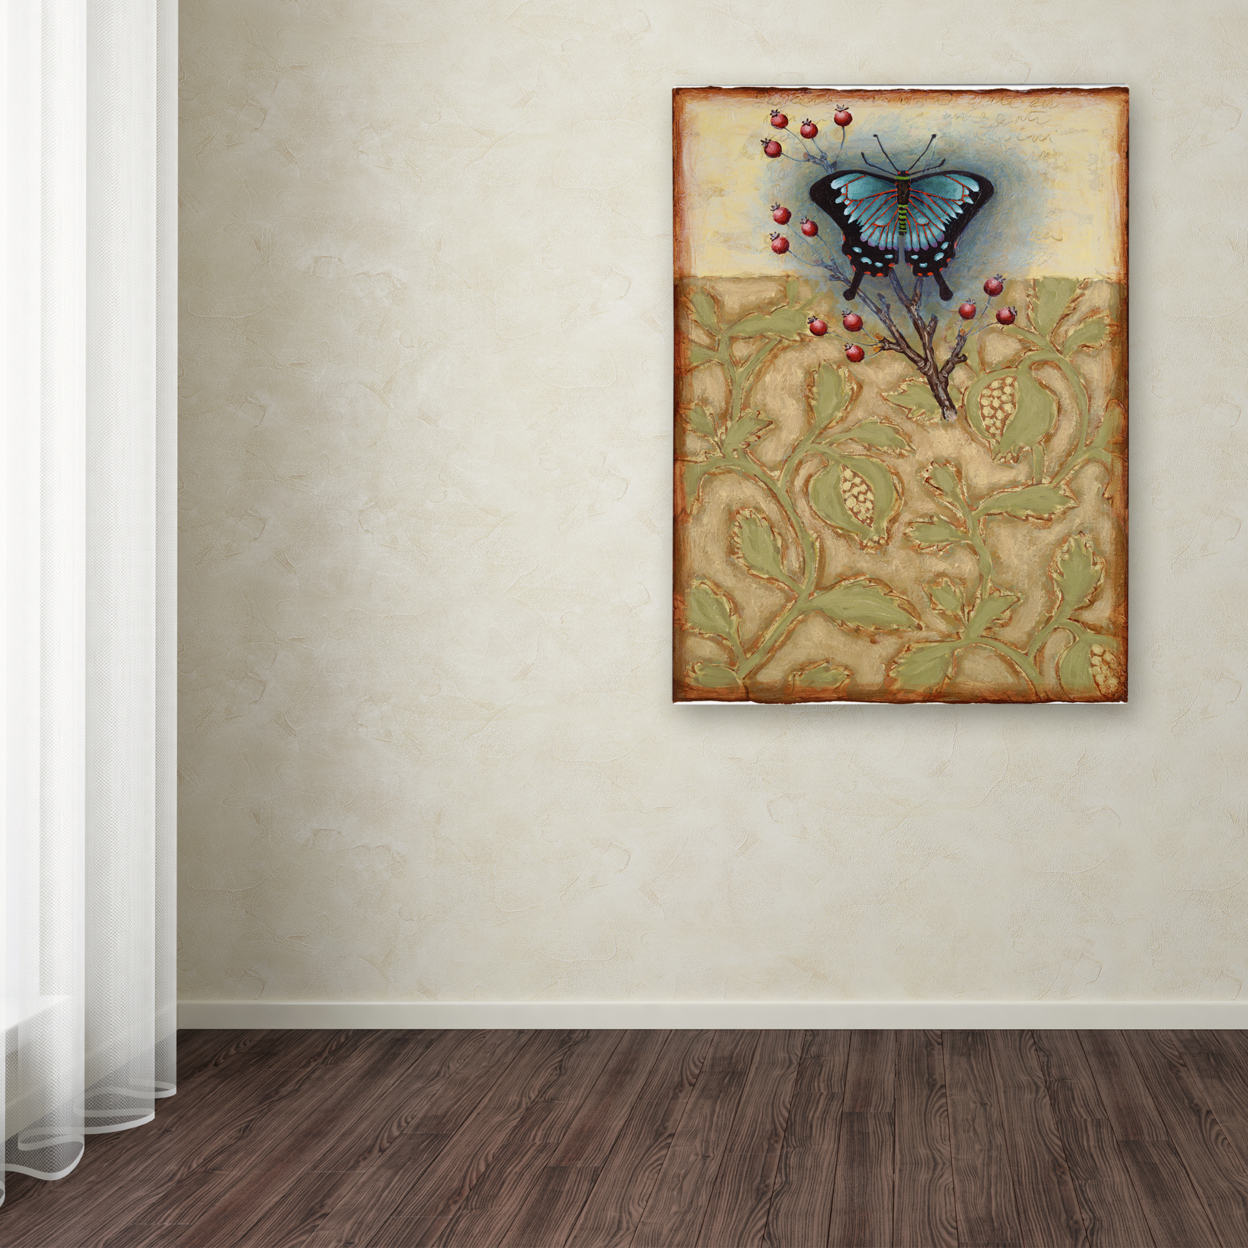 Rachel Paxton 'Salt Meadow Butterfly' Canvas Wall Art 35 X 47 Inches